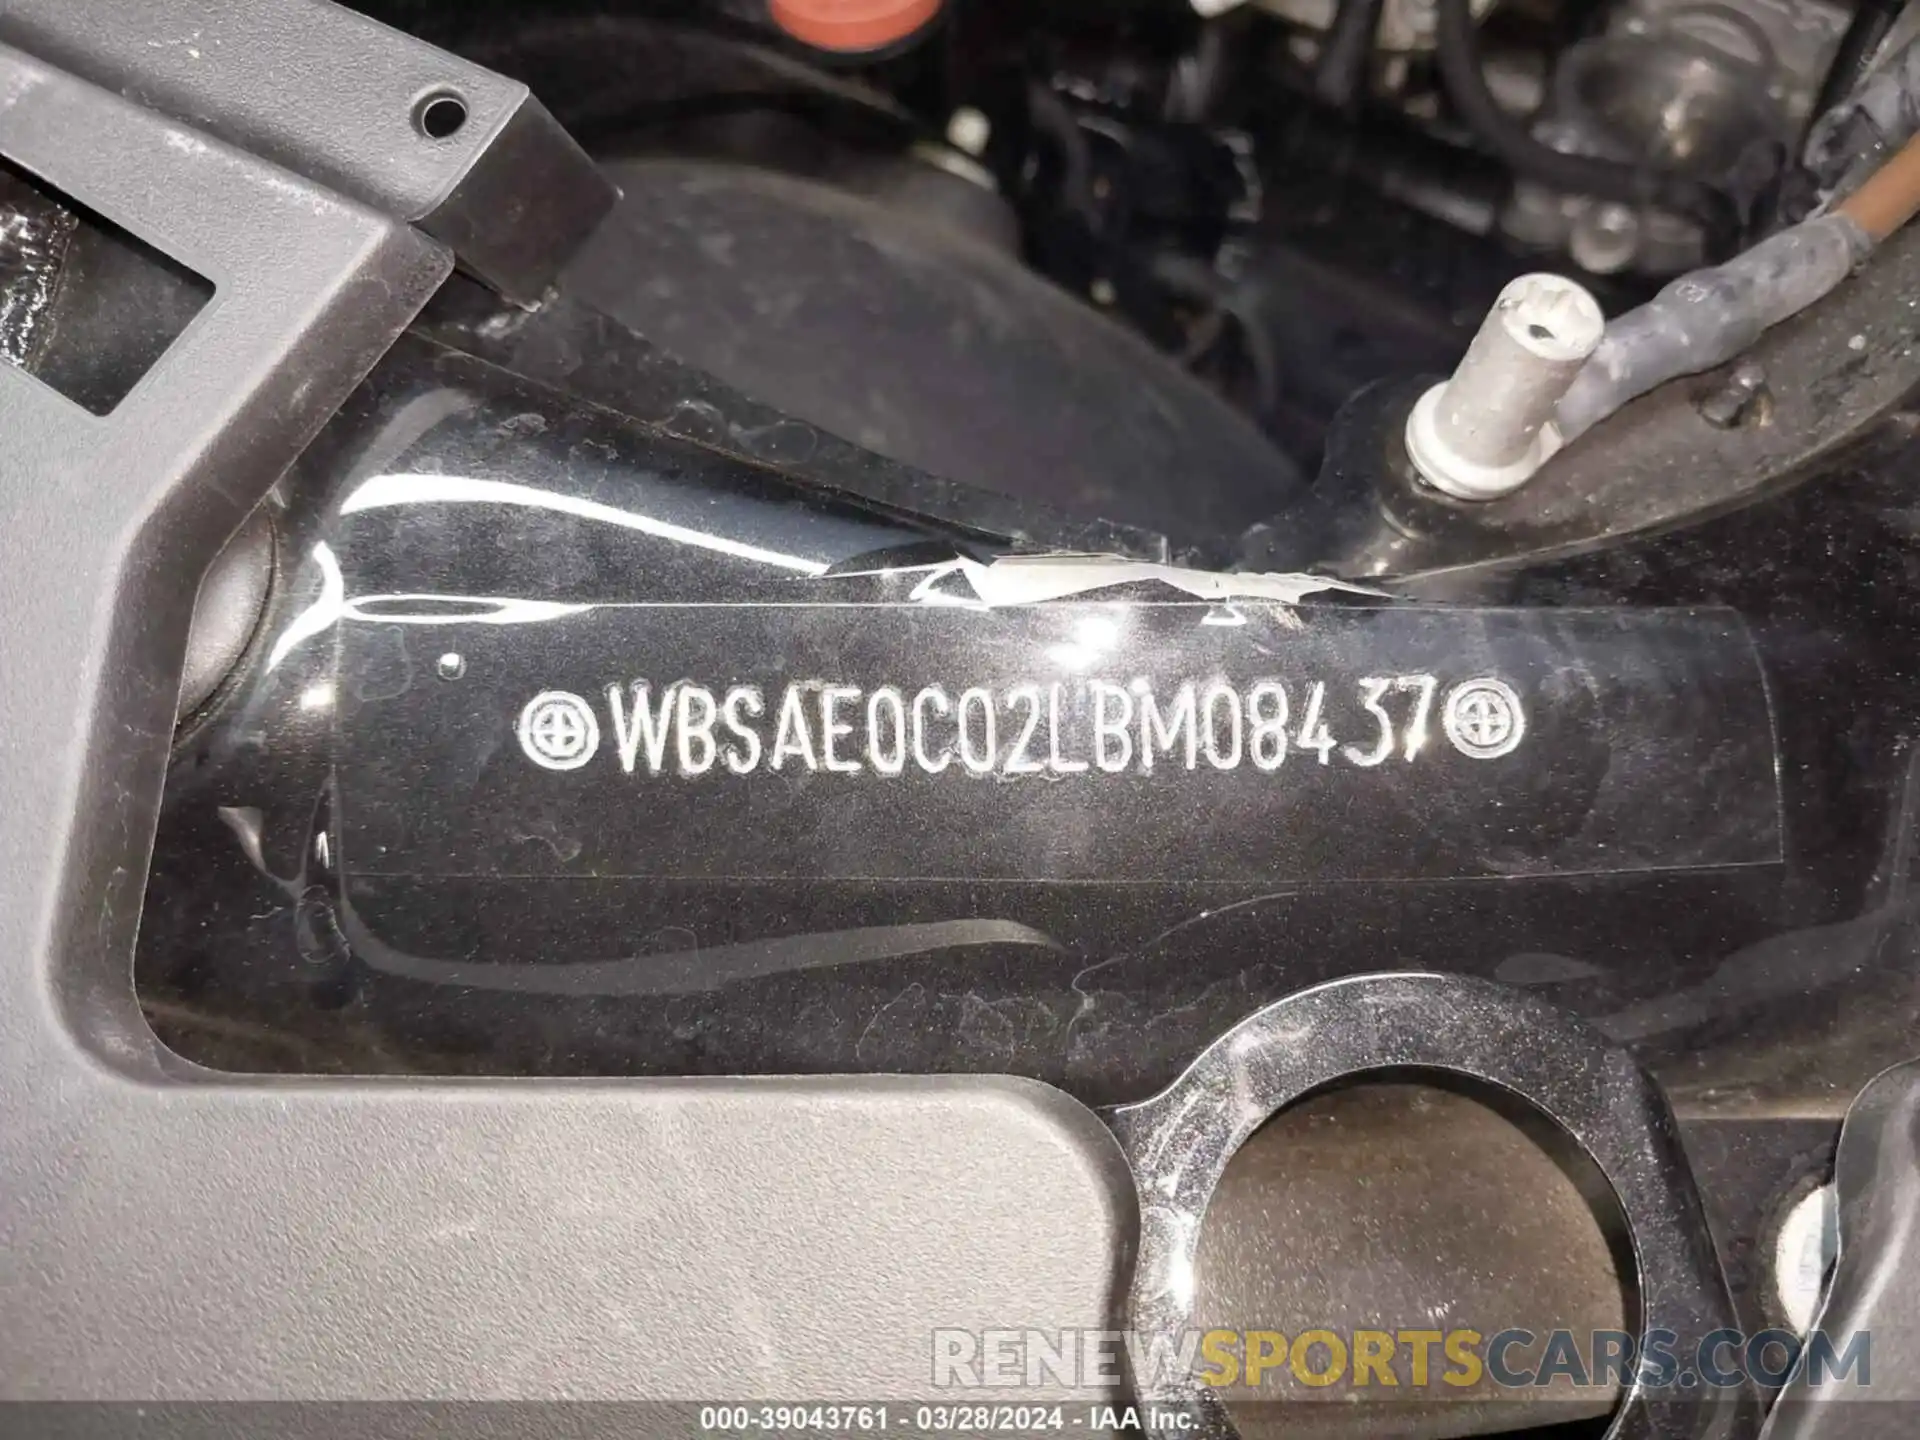 18 Photograph of a damaged car WBSAE0C02LBM08437 BMW M8 2020